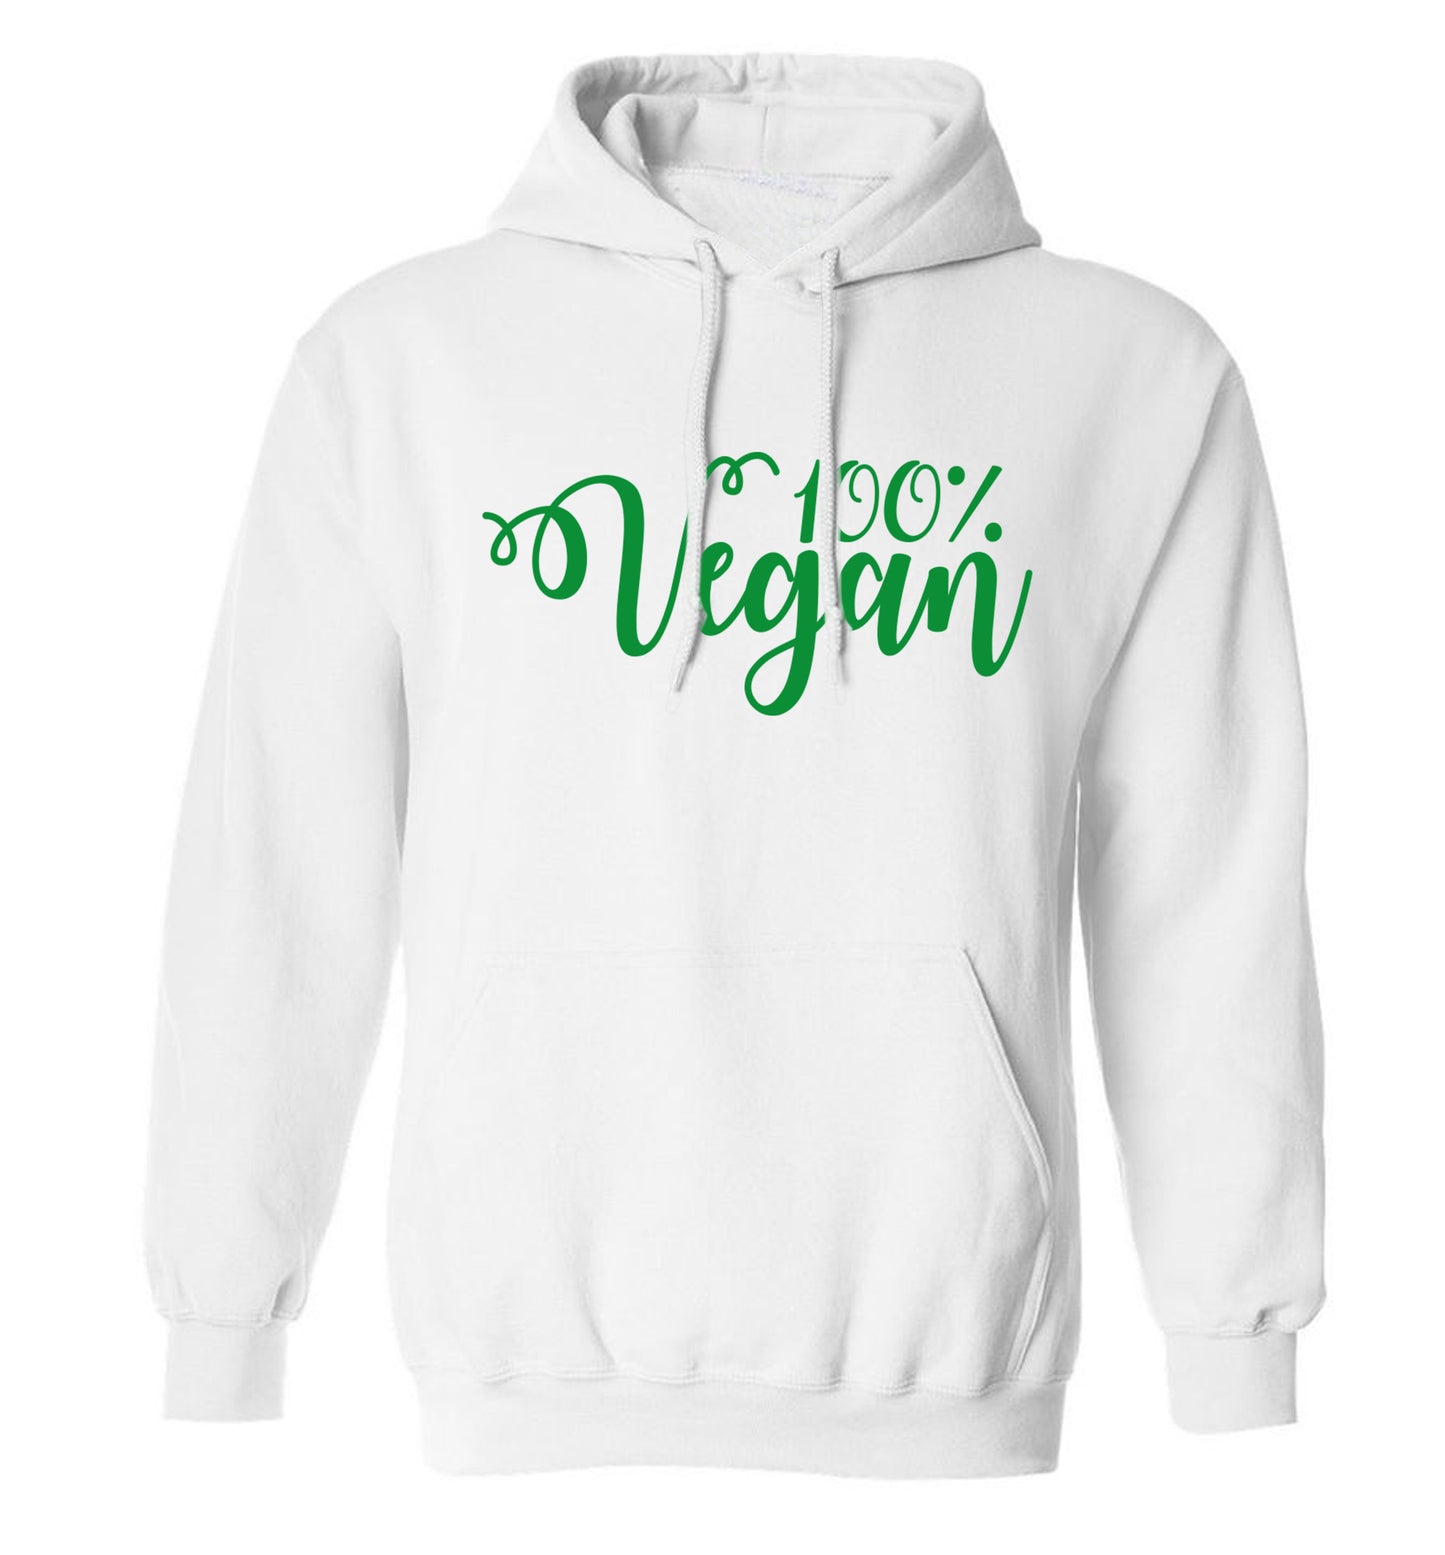 100% Vegan adults unisex white hoodie 2XL